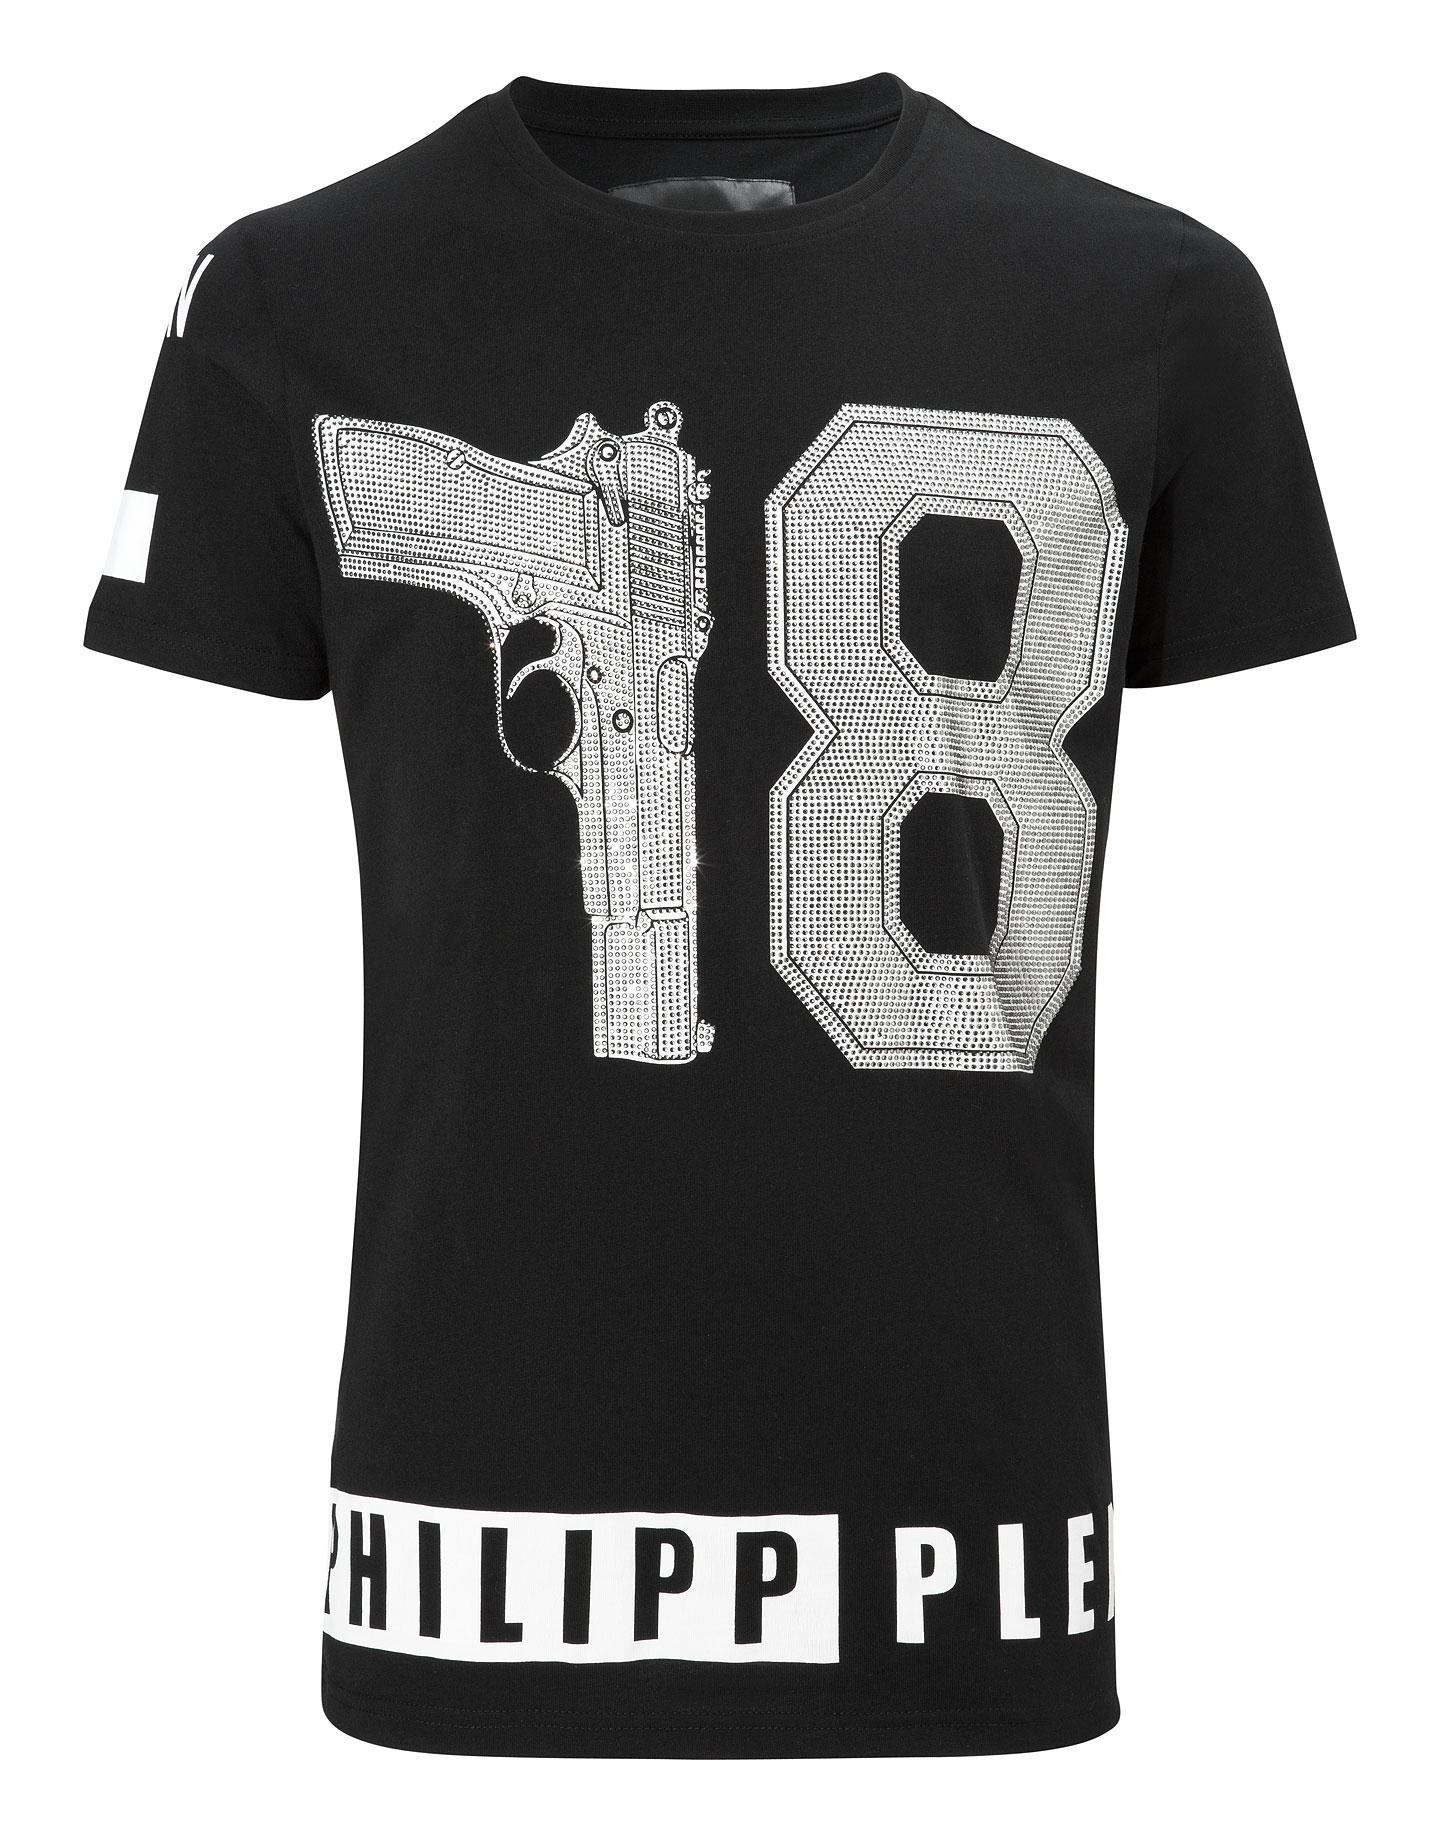 philipp plein t shirt 78